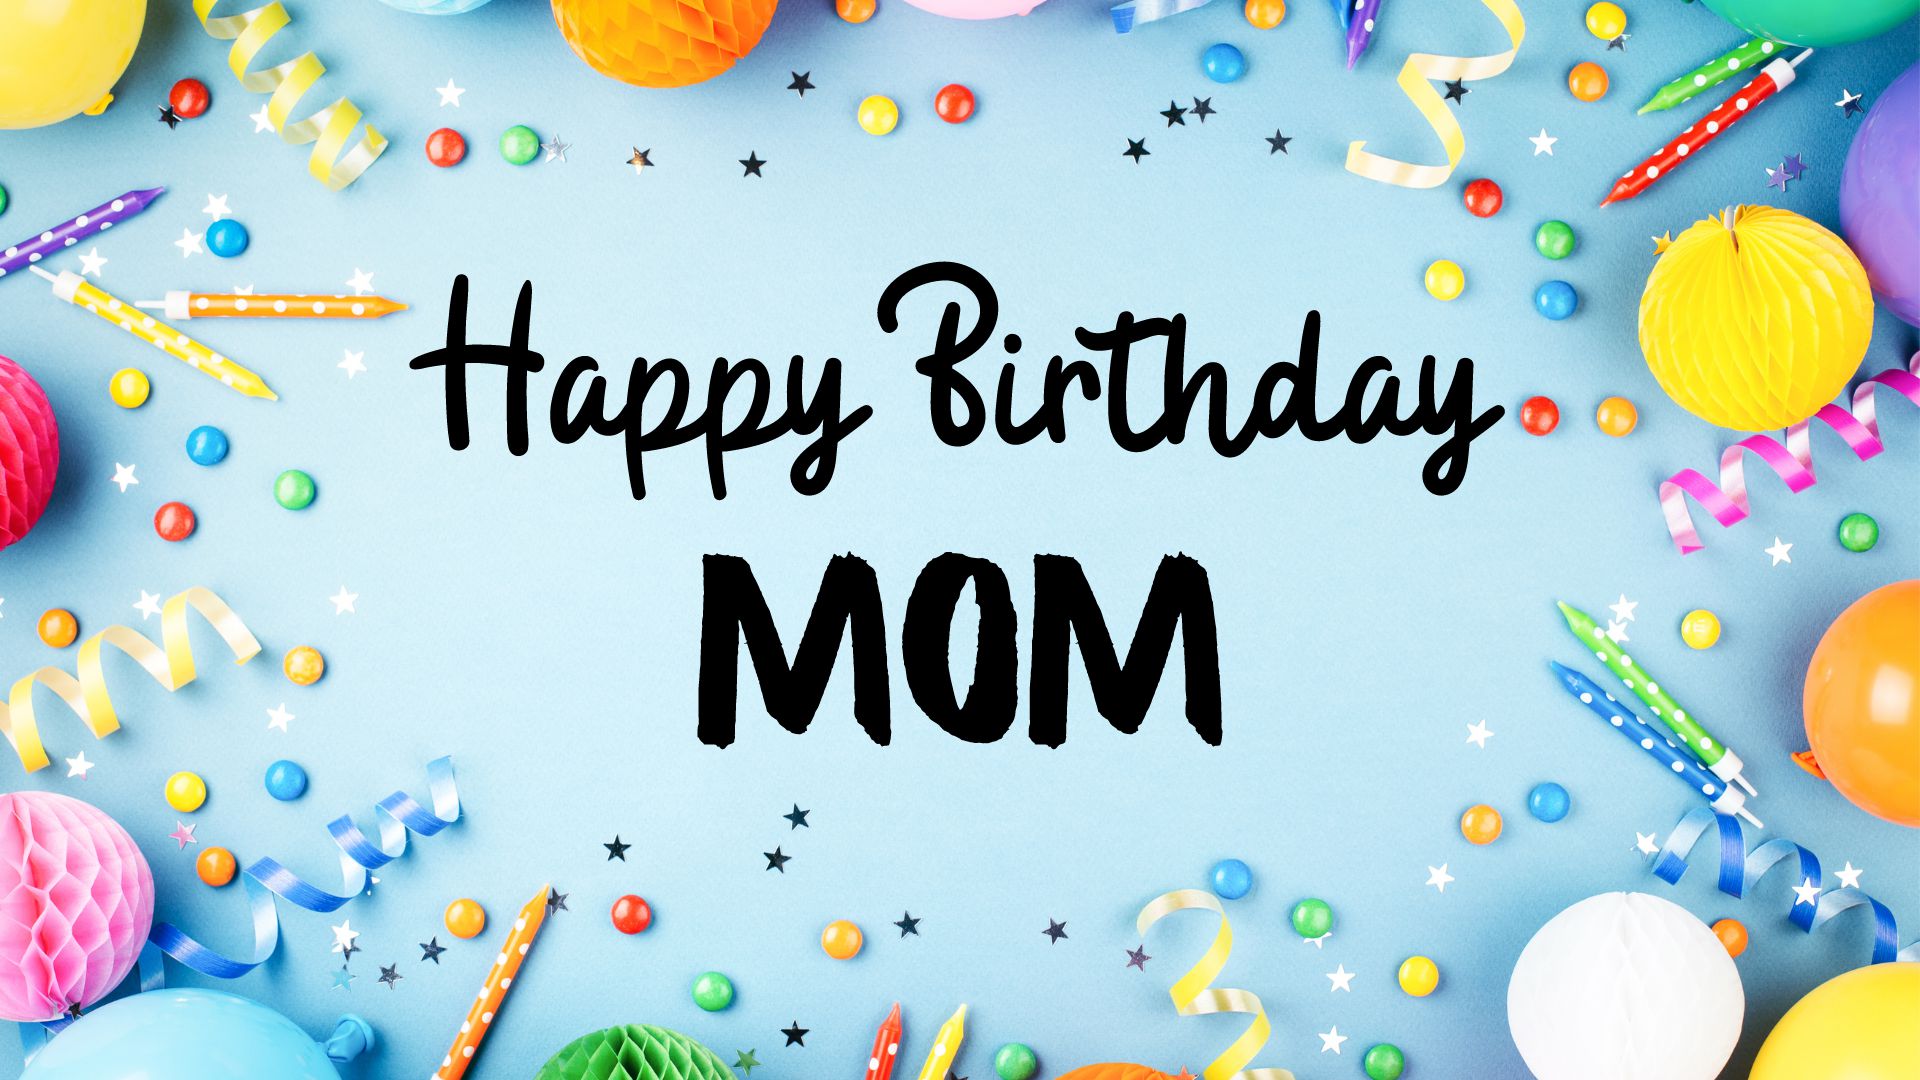 Happy Birthday Mom Wishes, Quotes & Whatsapp Image